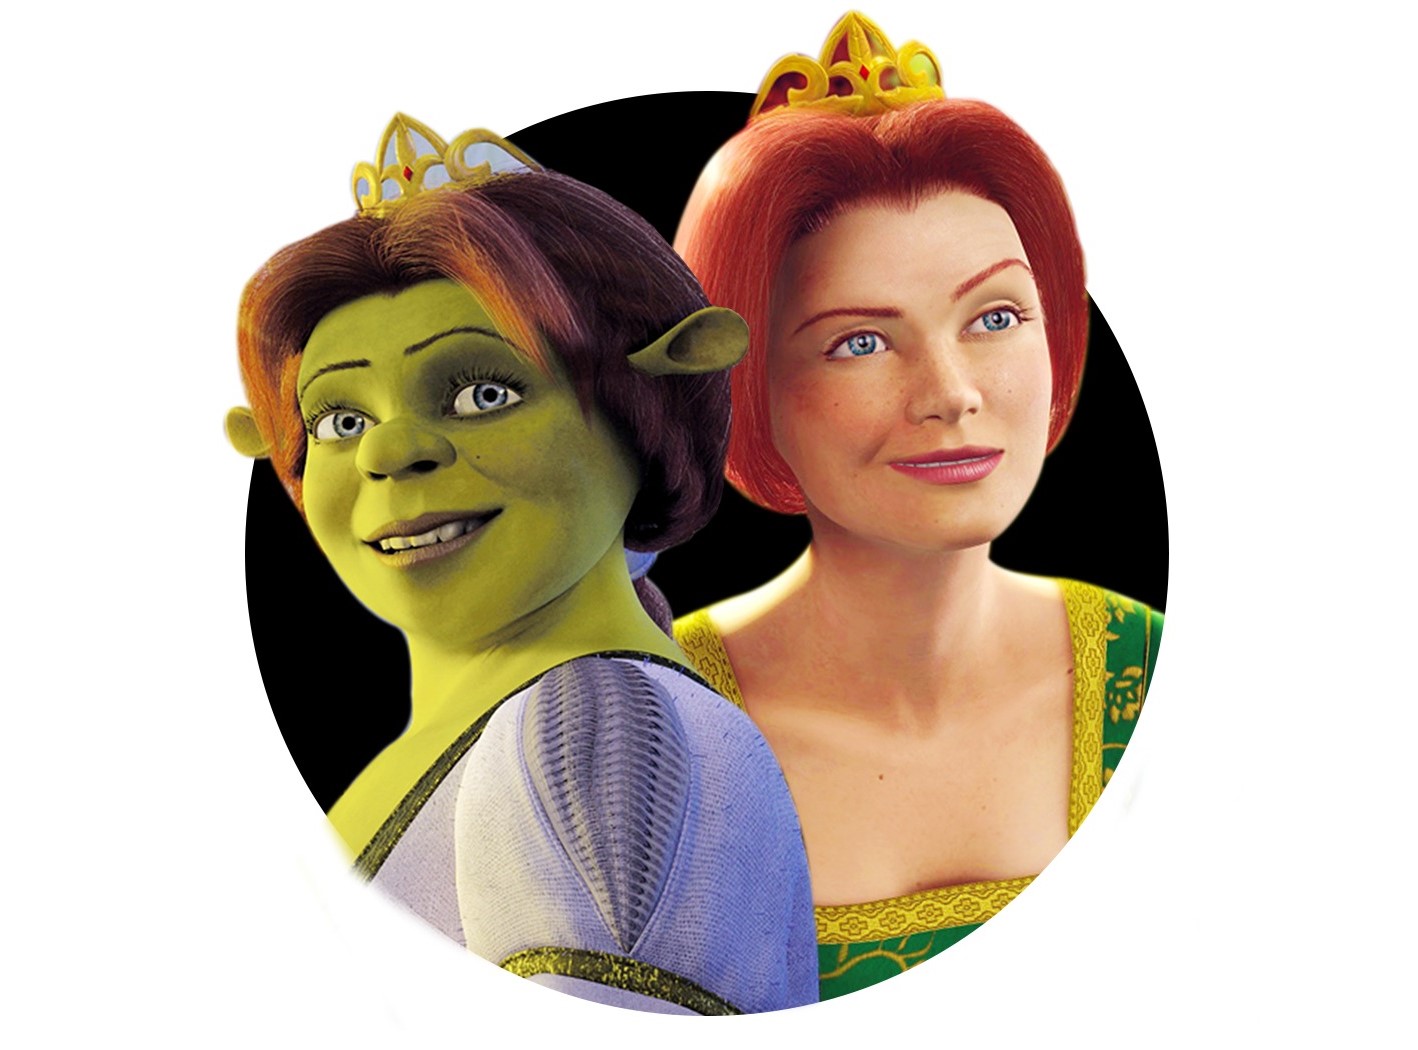 Shrek And Fiona's Love Story